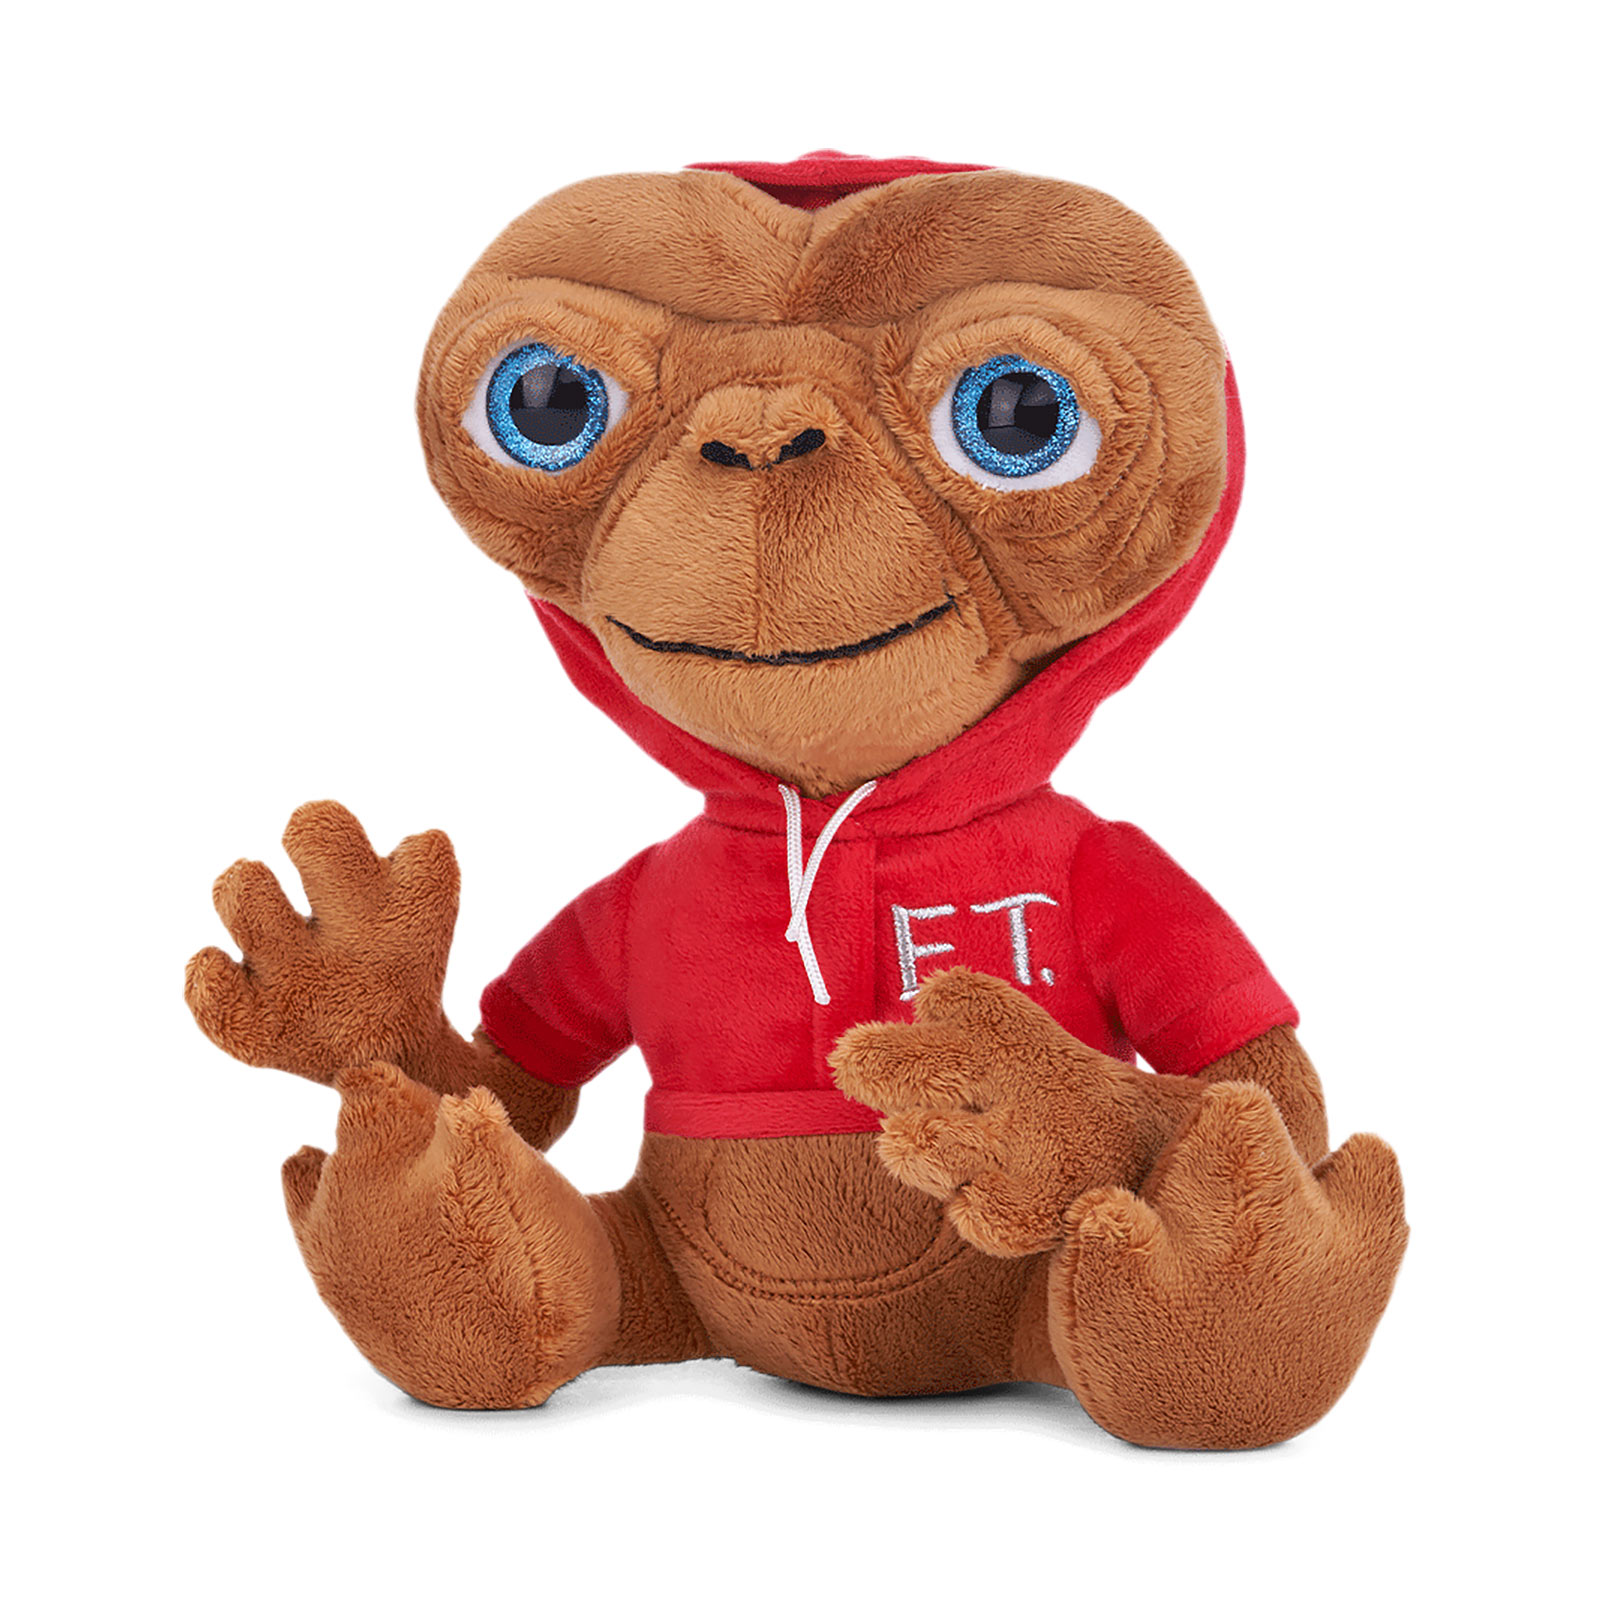 E.T. plush figure with red sweatshirt